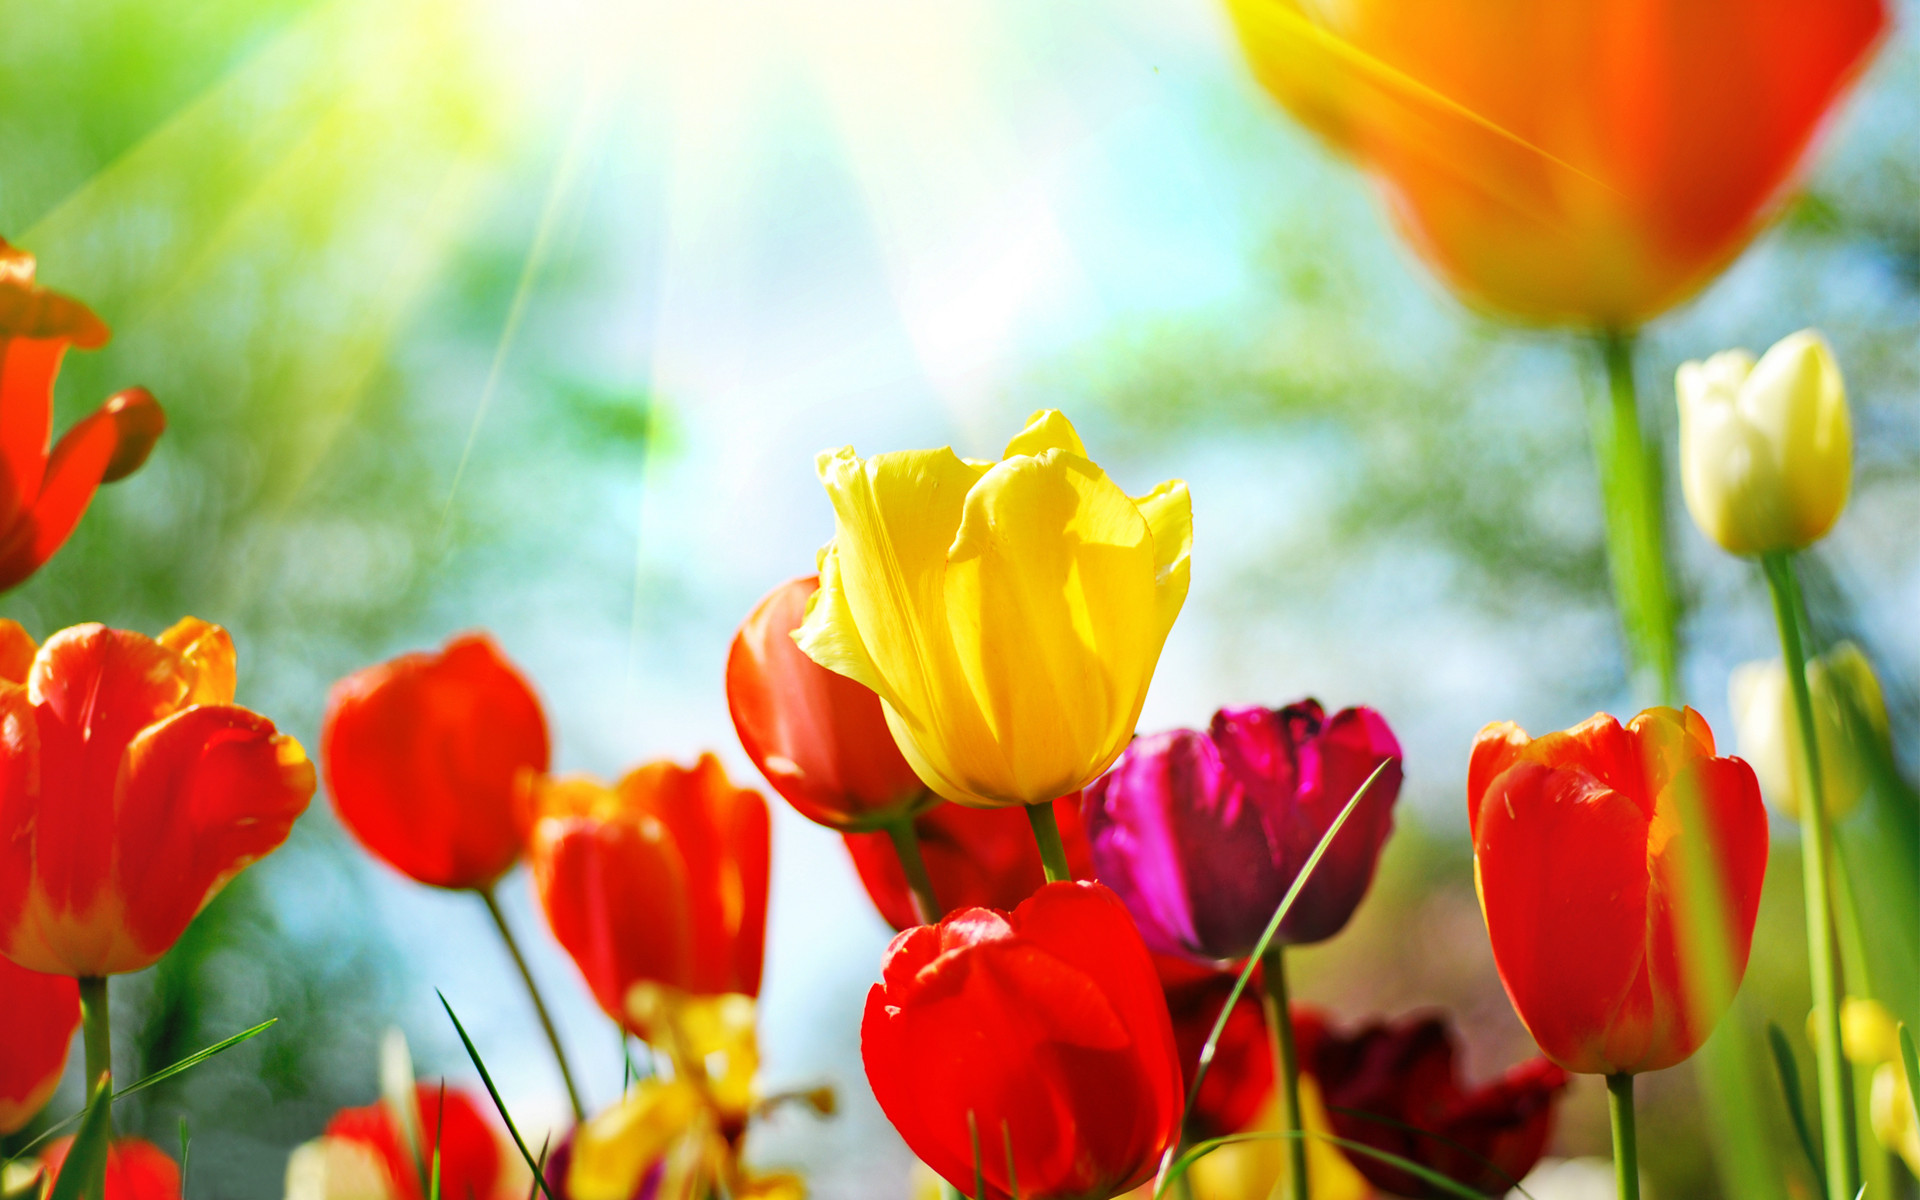 frühlingsblumen desktop hintergrund,blume,blühende pflanze,blütenblatt,tulpe,gelb